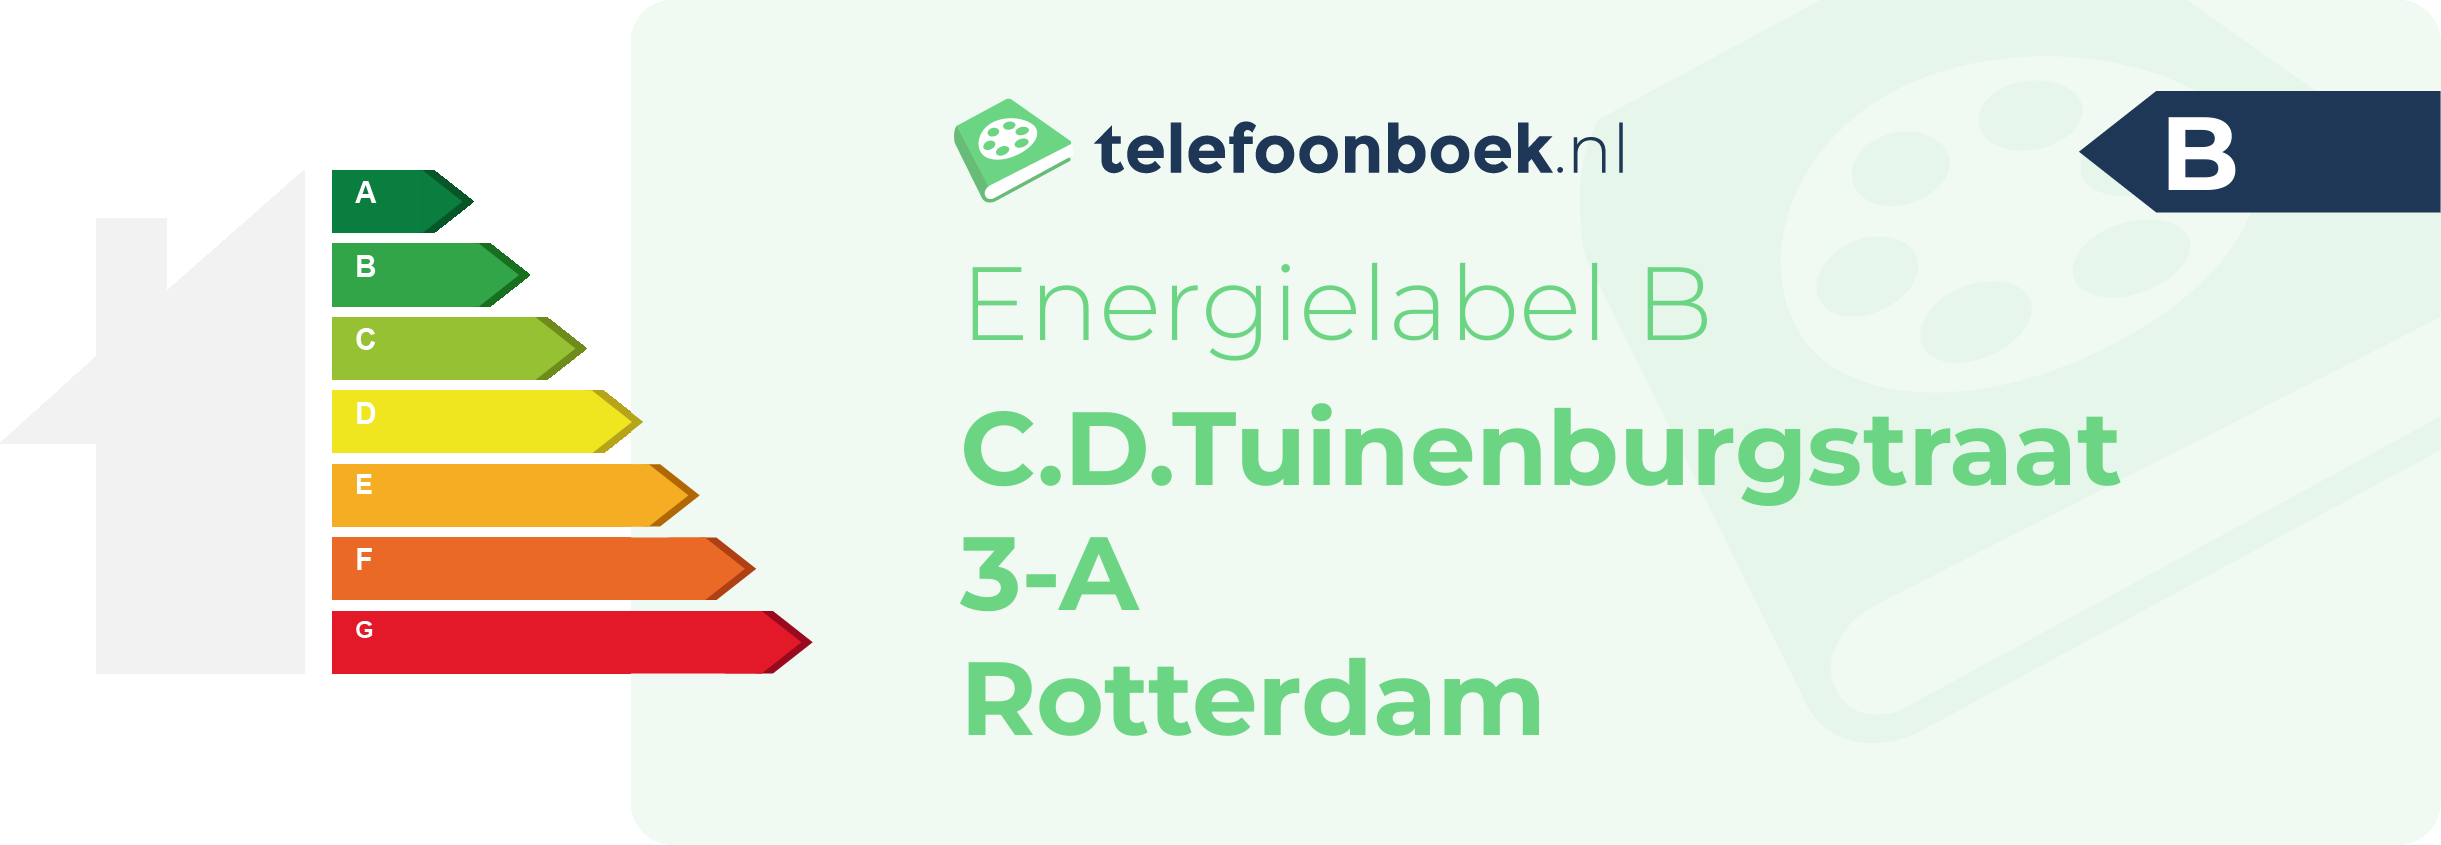 Energielabel C.D.Tuinenburgstraat 3-A Rotterdam